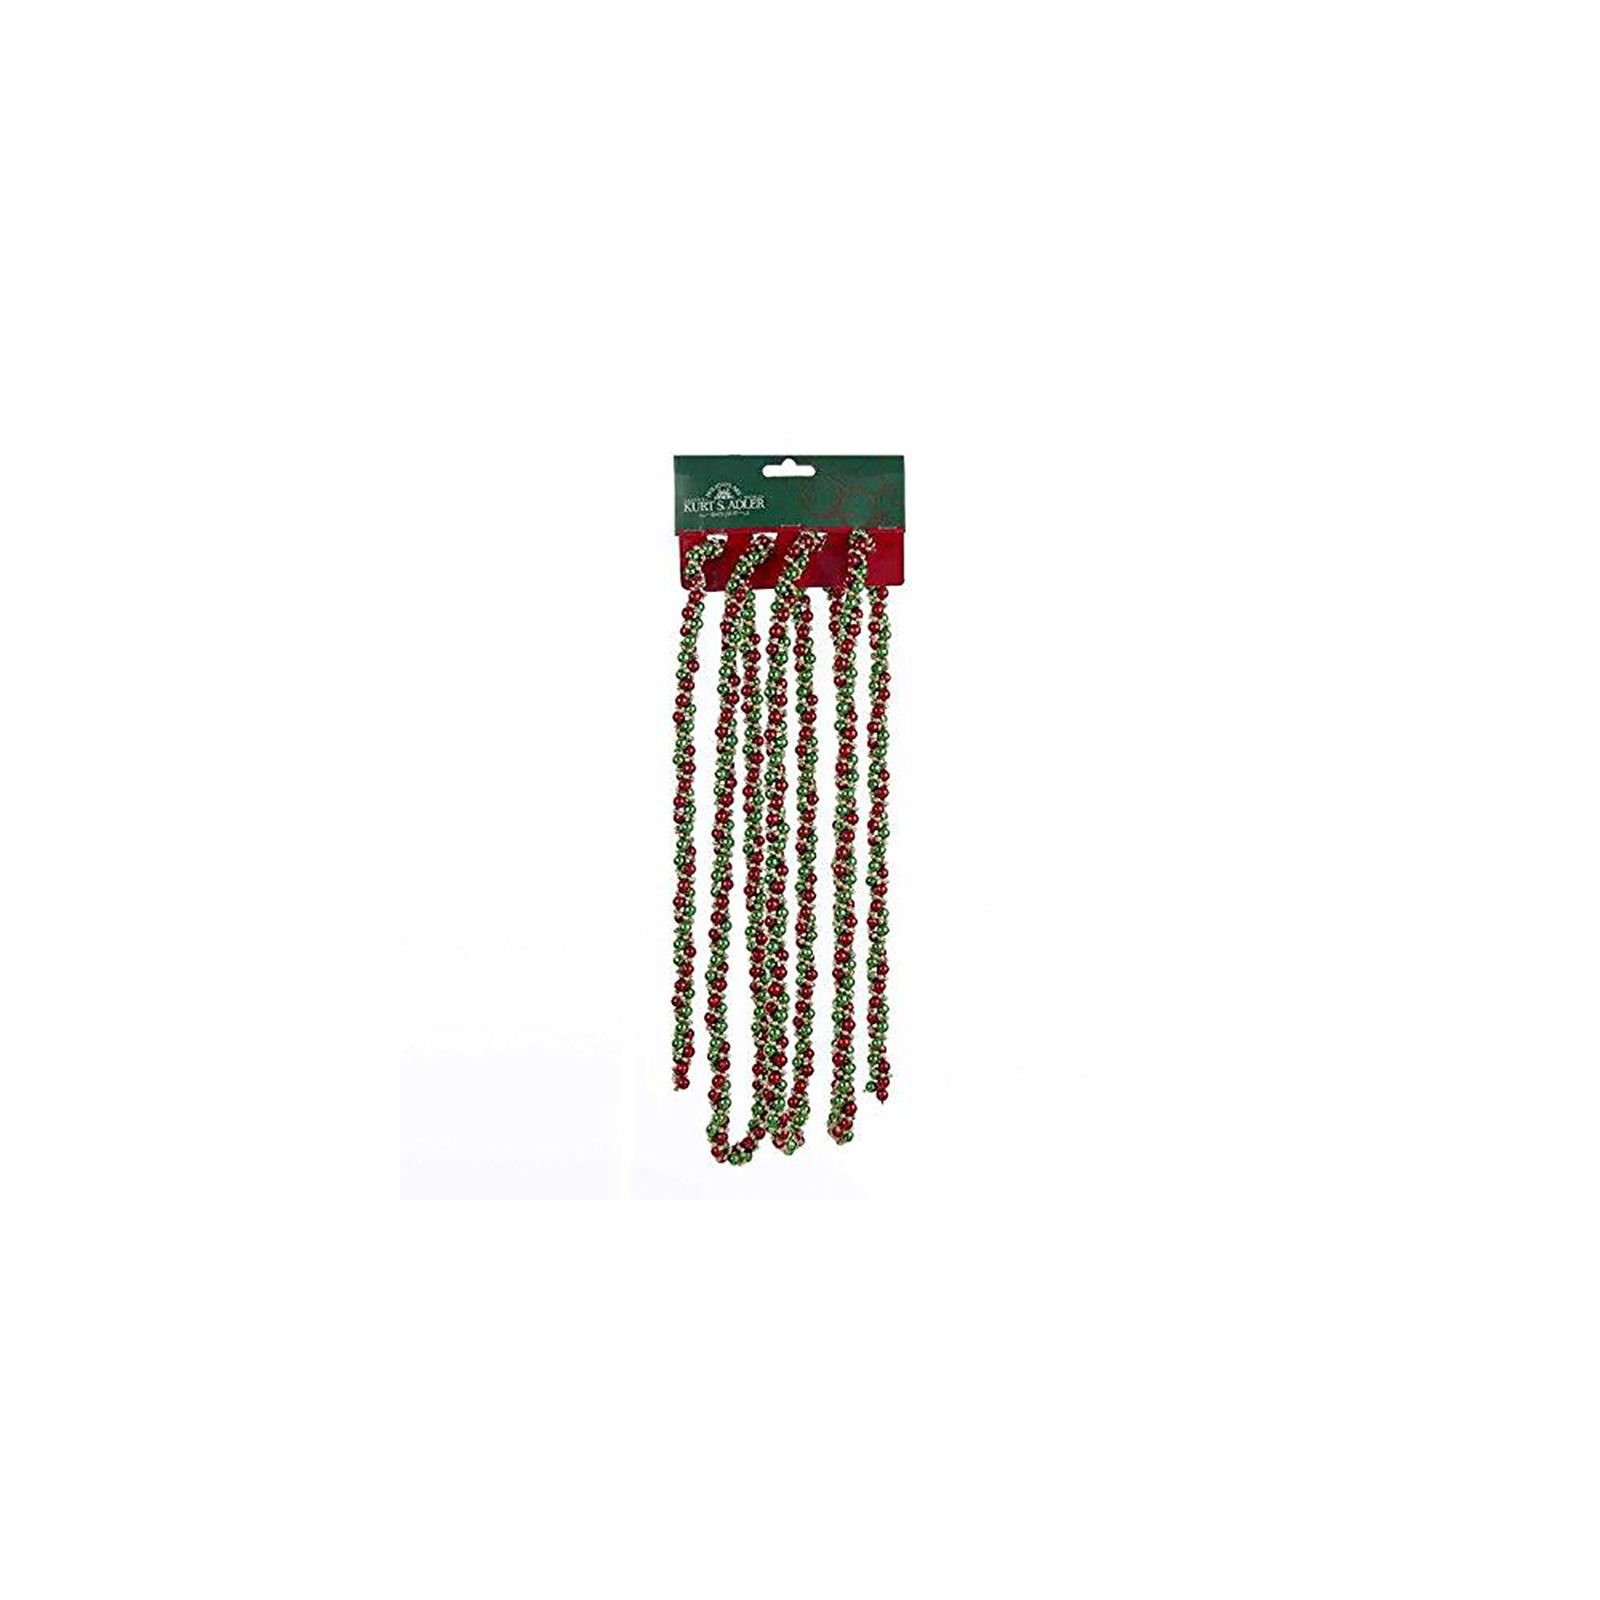 Kurt S. Adler 9' Twisted Bead Christmas Garland - Red, Green & Gold